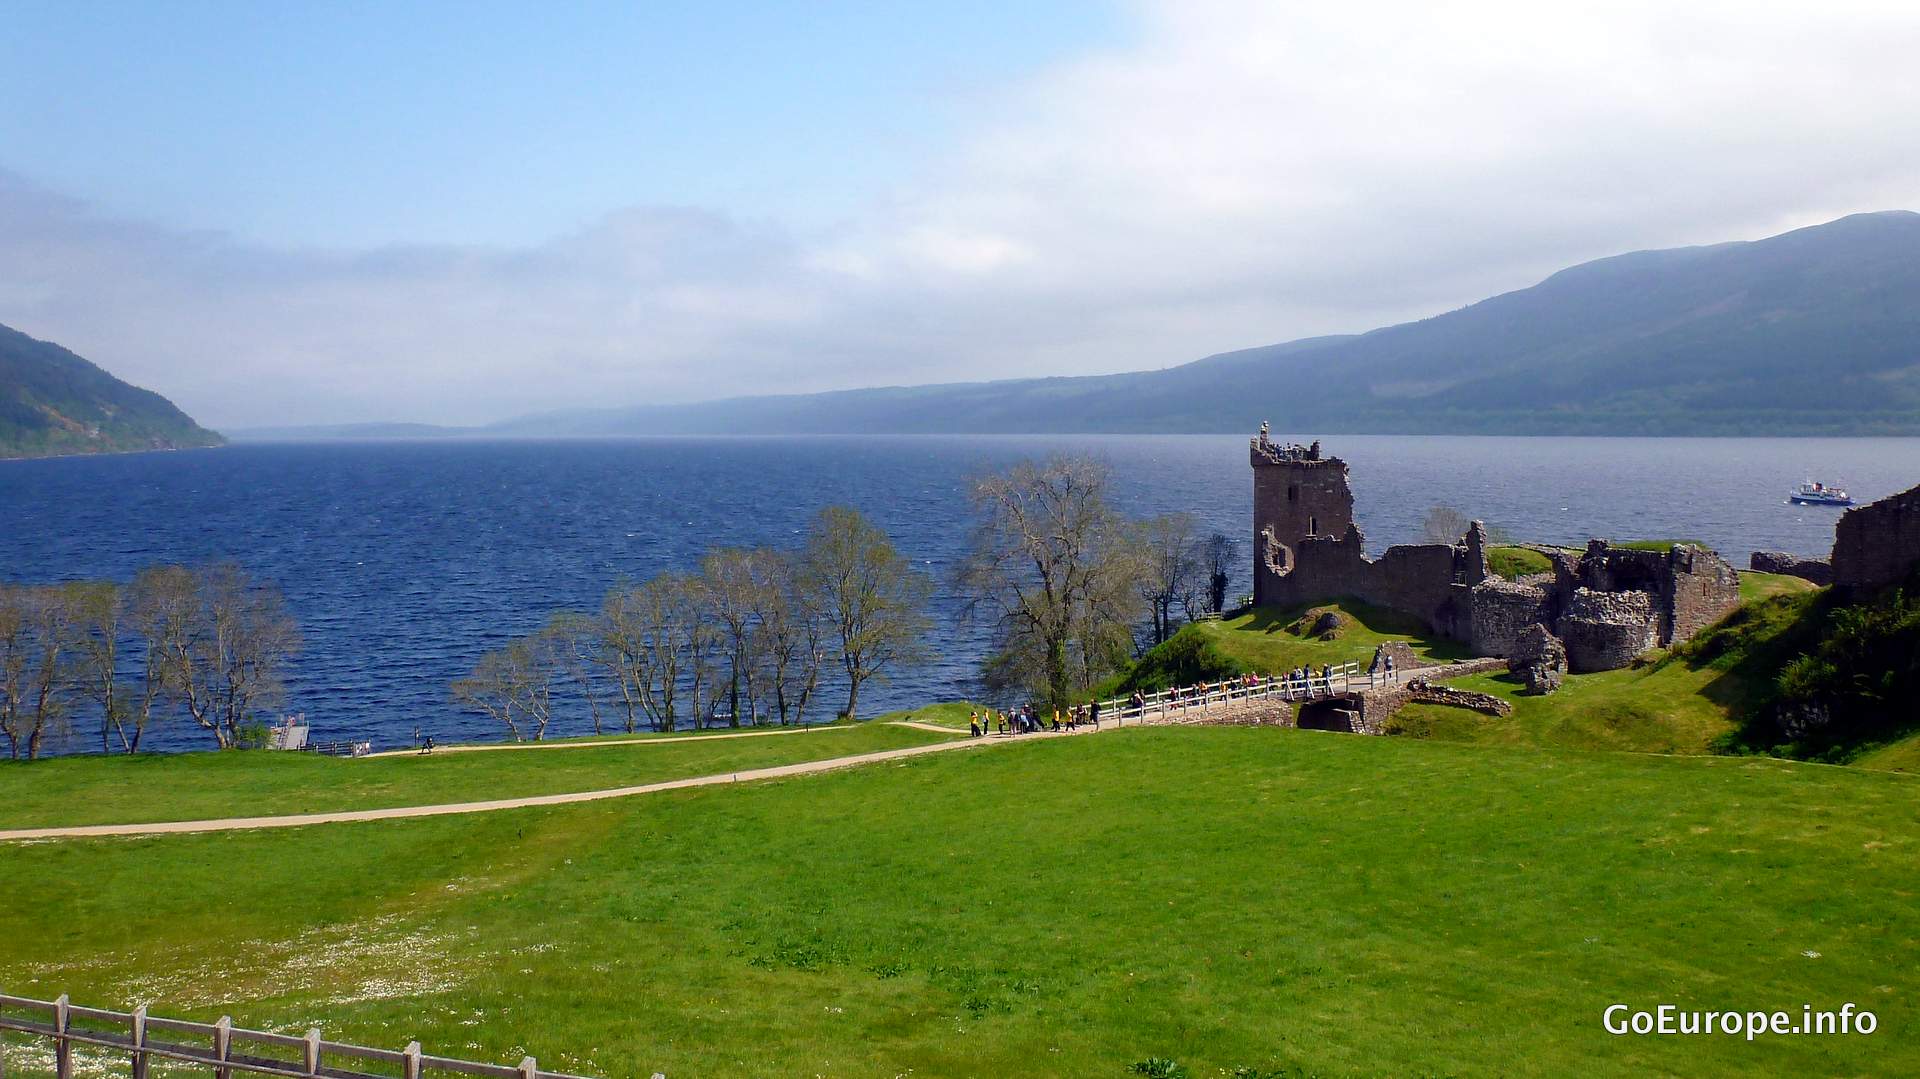 Visit Urquhart Castle along the Loch Ness lake.